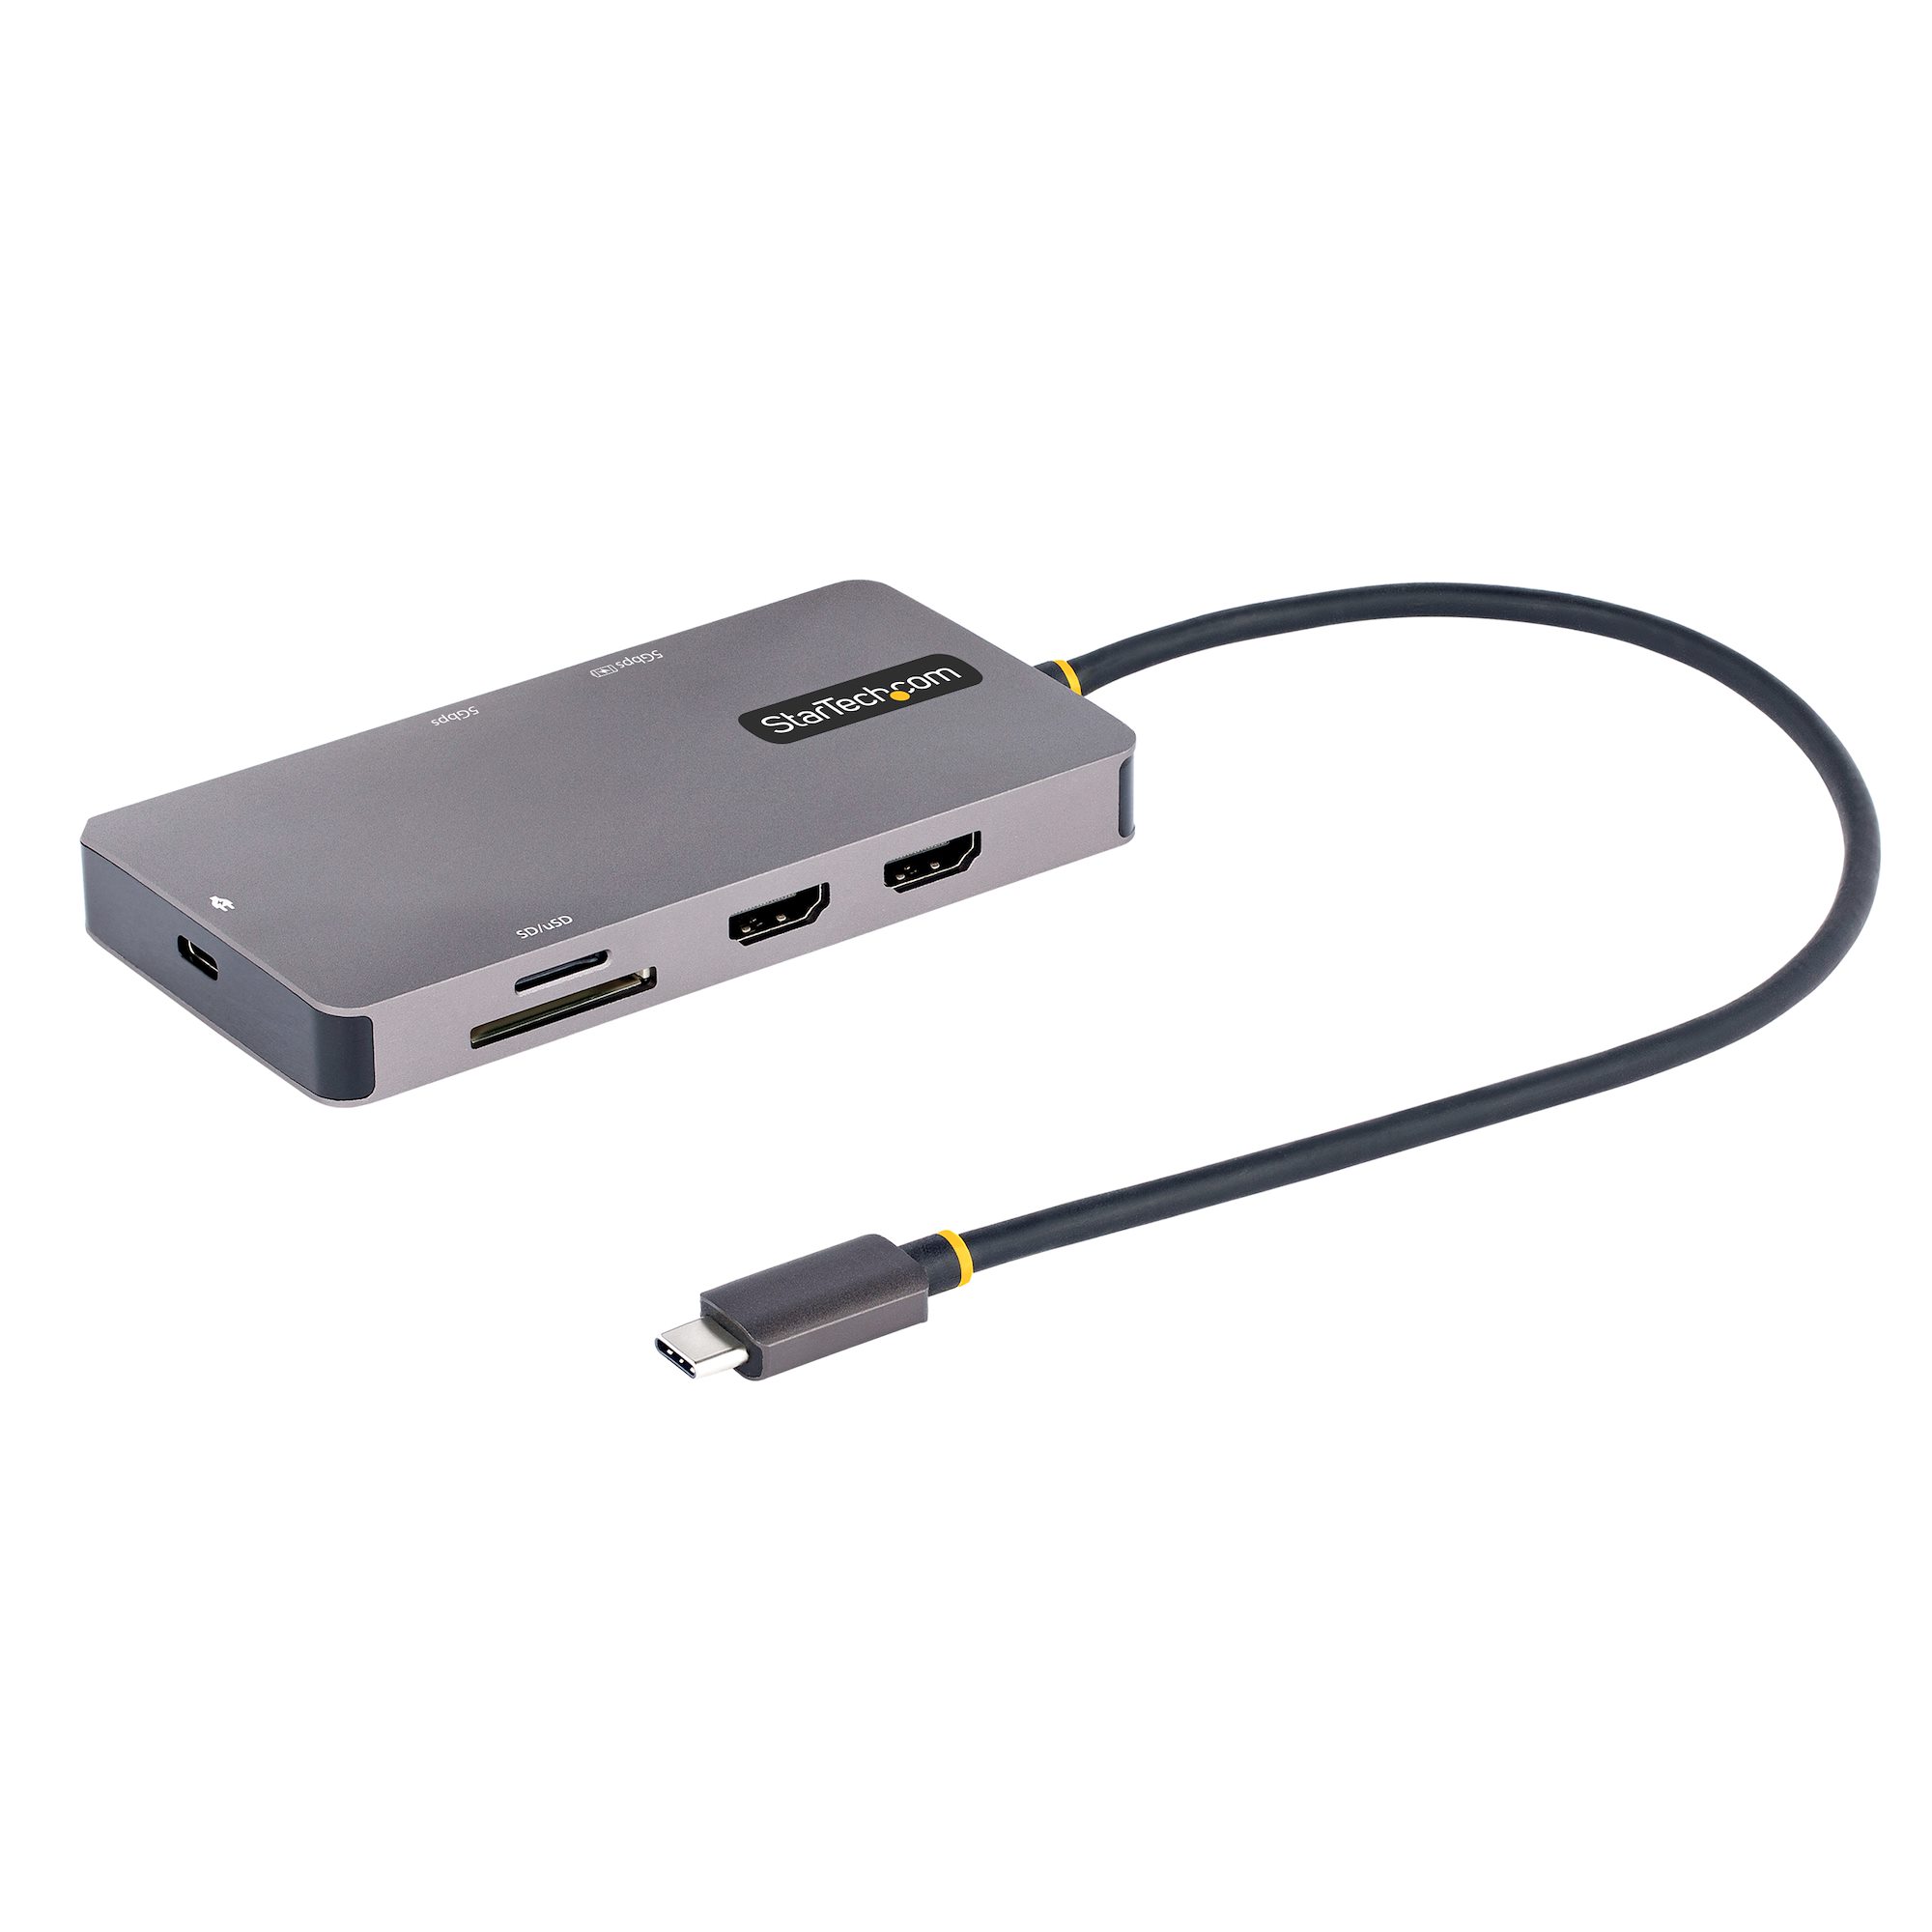 【120B-USBC-MULTIPORT】USB C MULTIPORT ADAPTER 2 HDMI